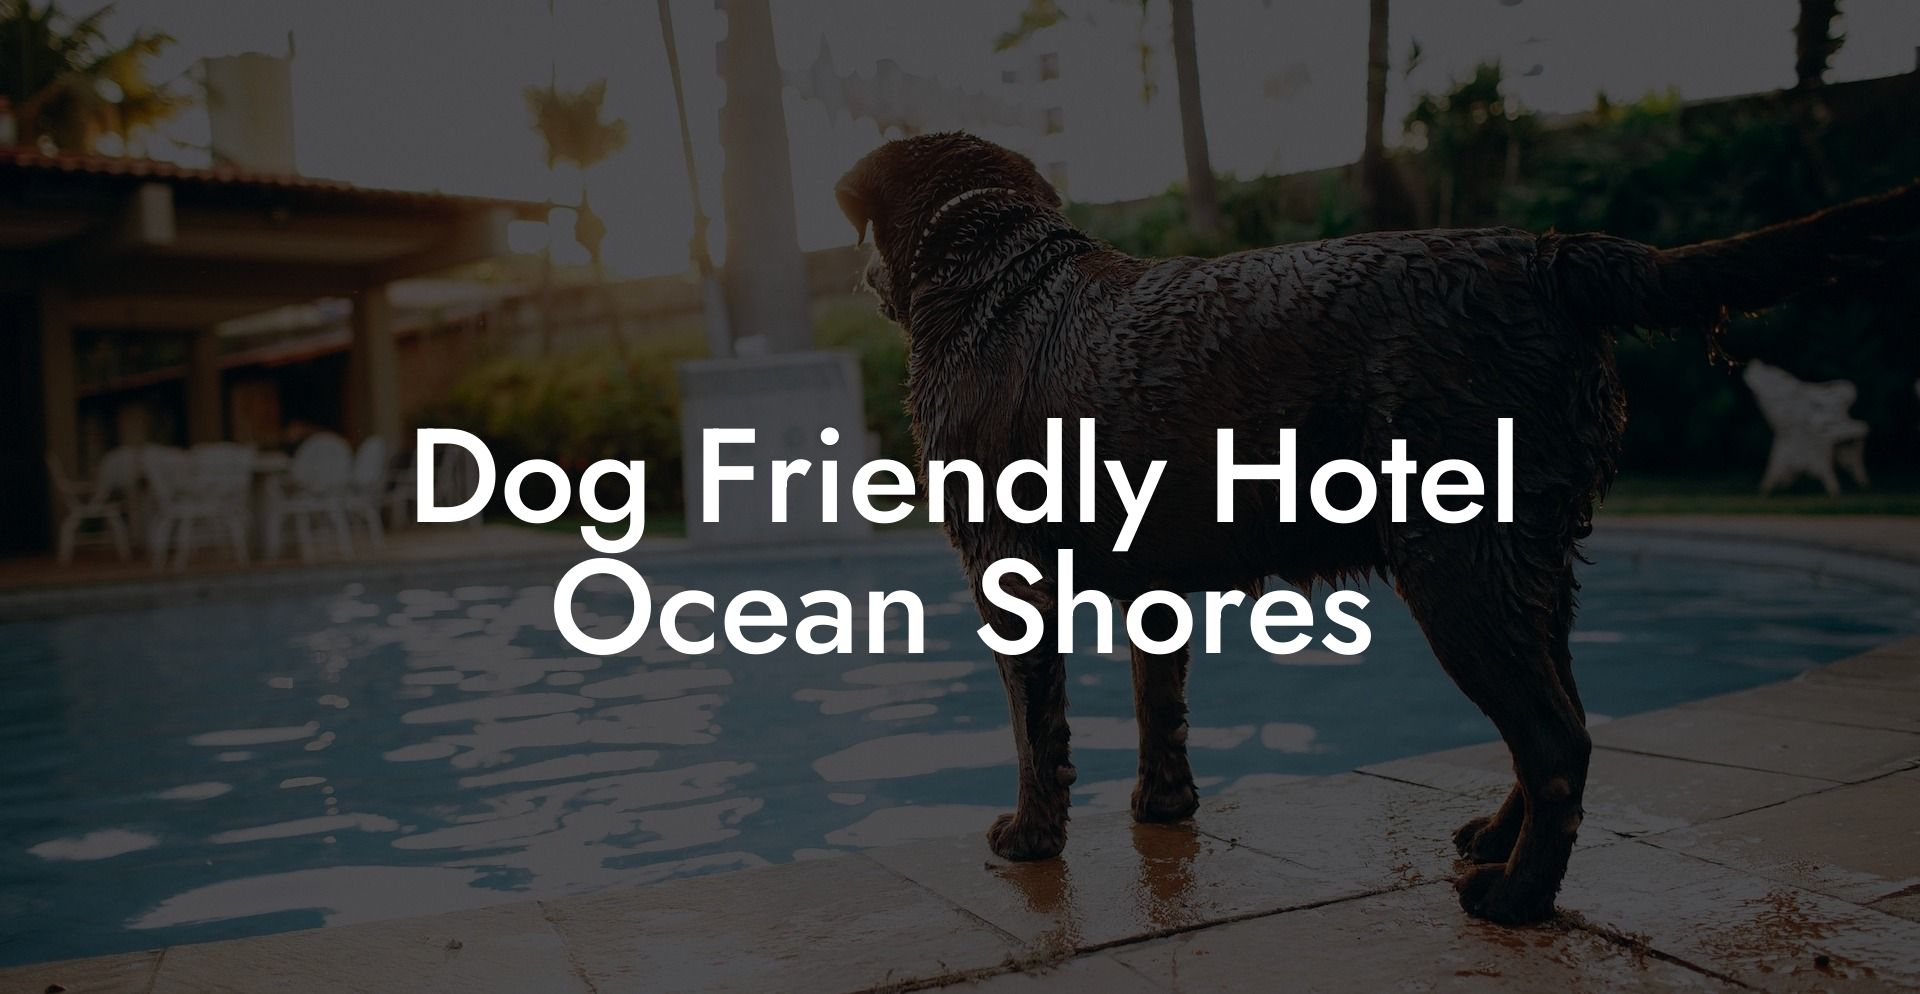 Dog Friendly Hotel Ocean Shores